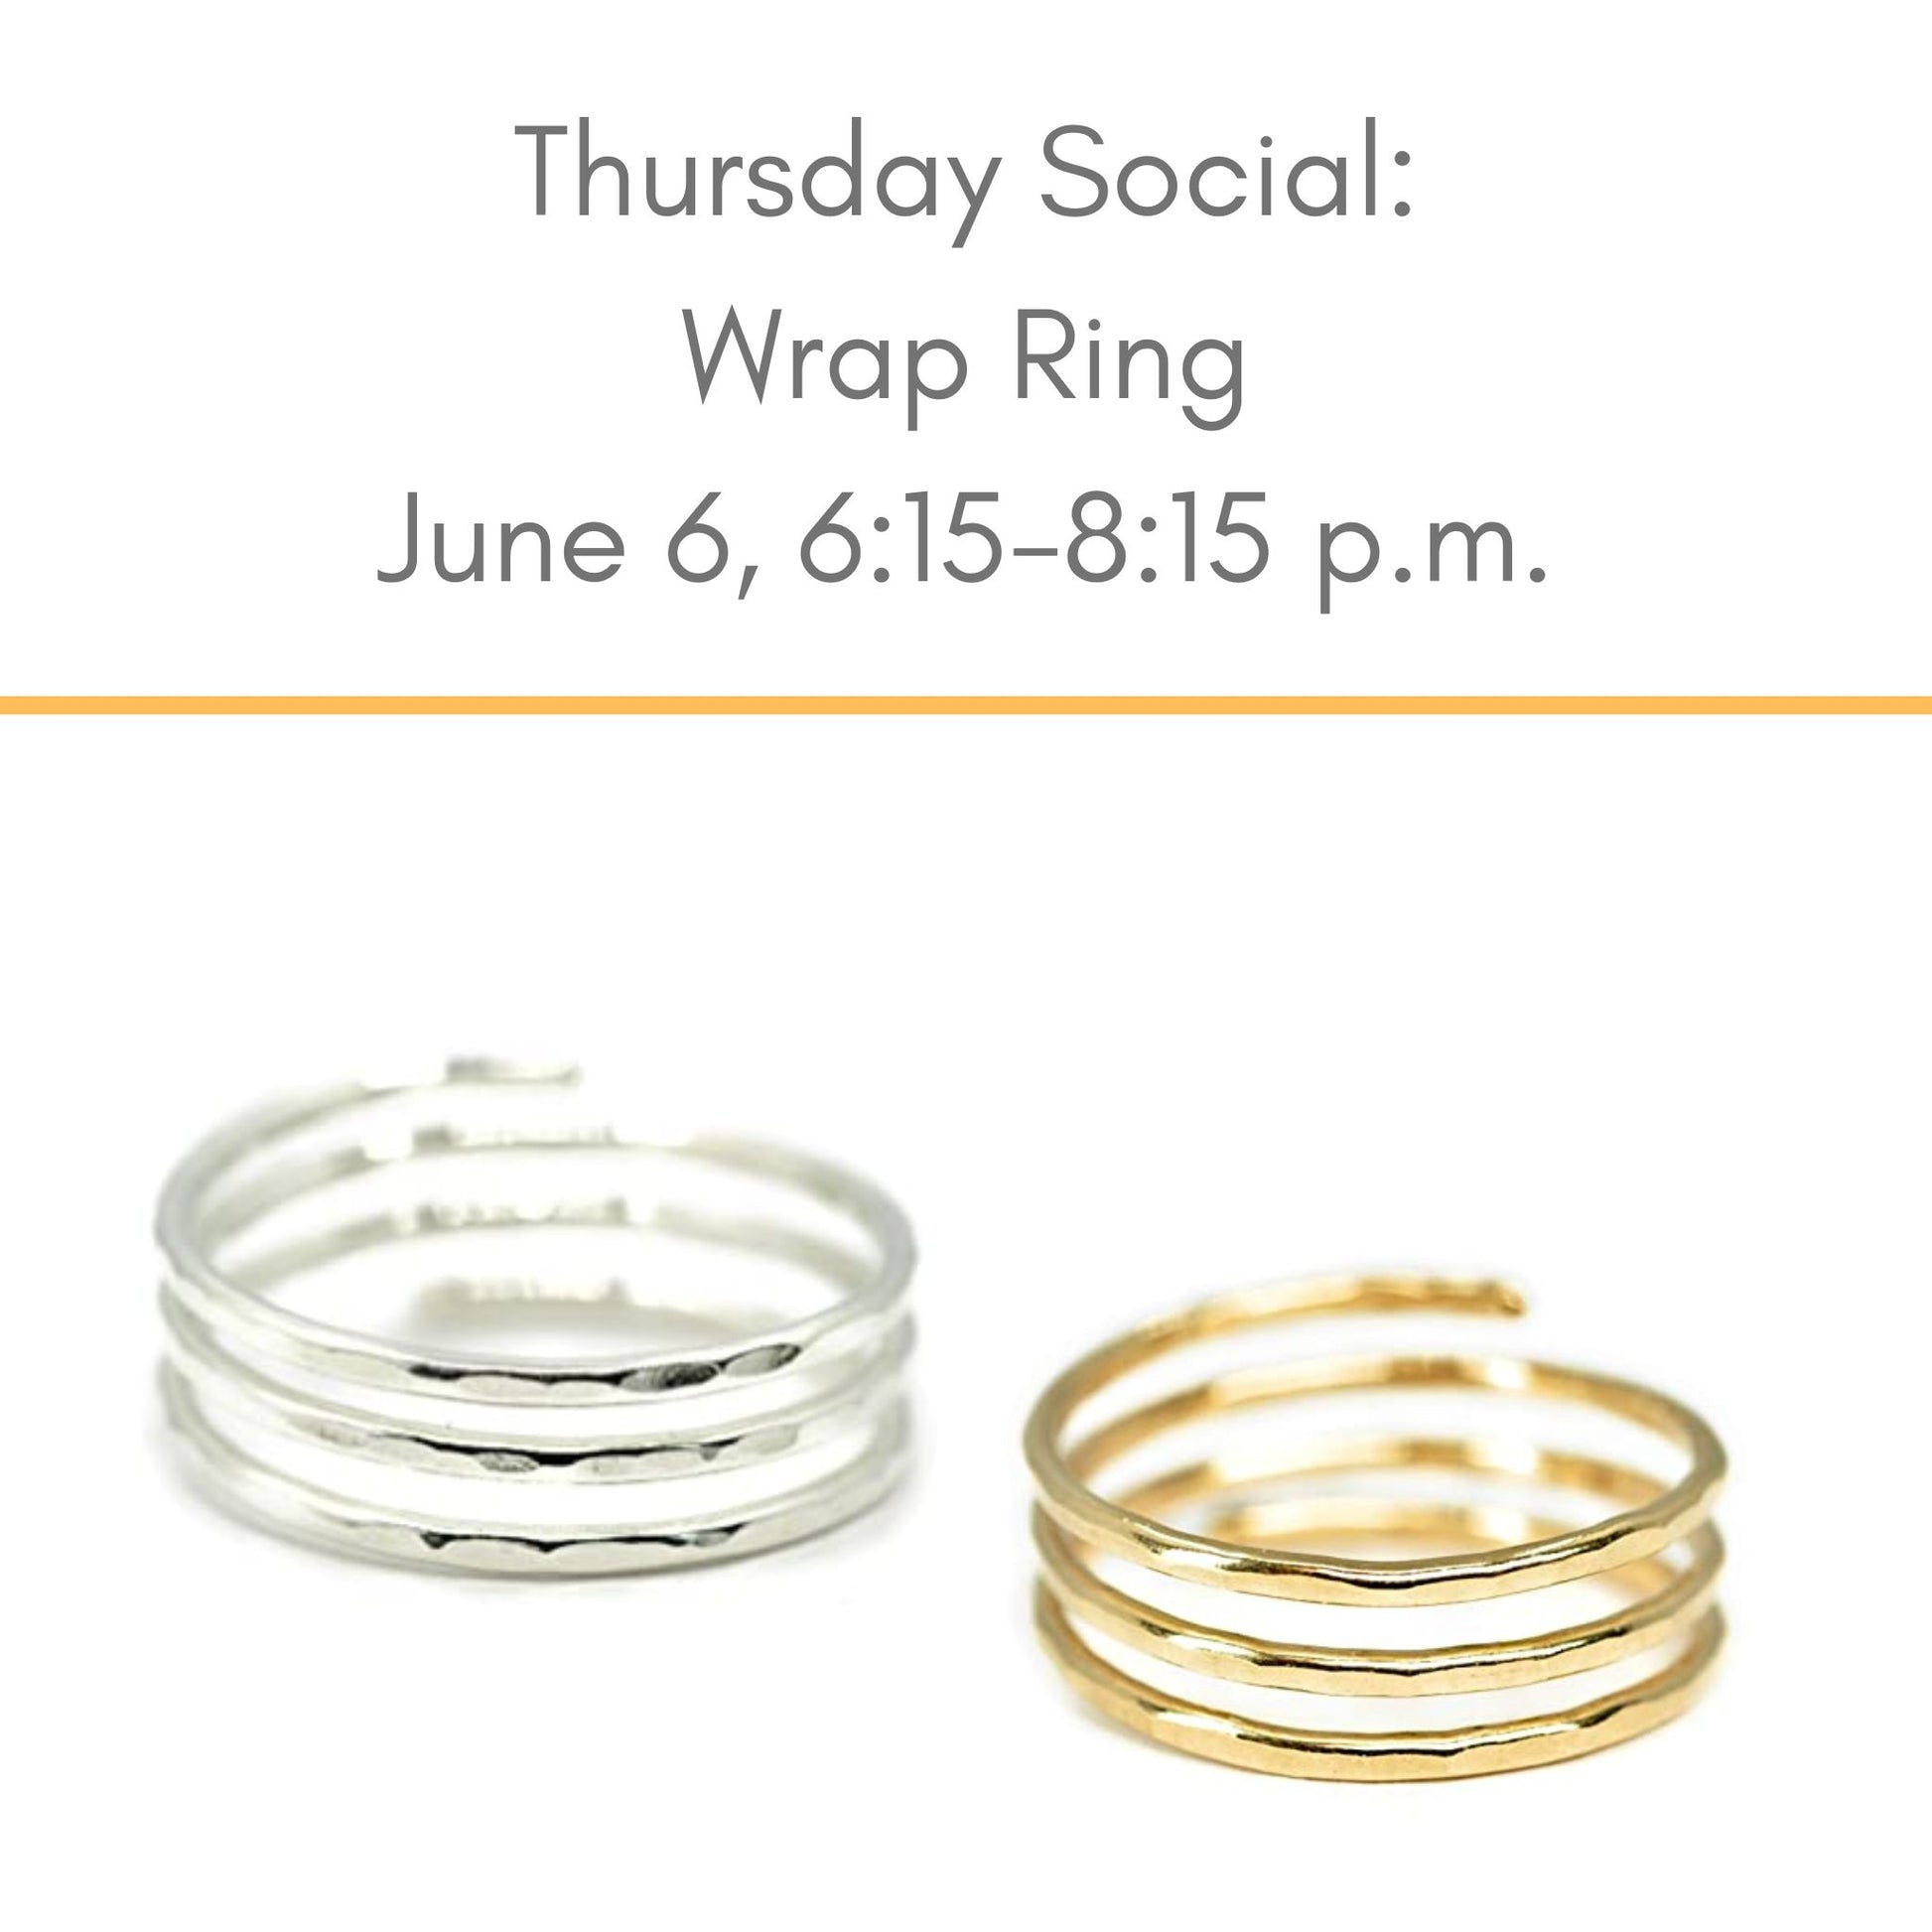 Wrap Ring Jewelry class June 6